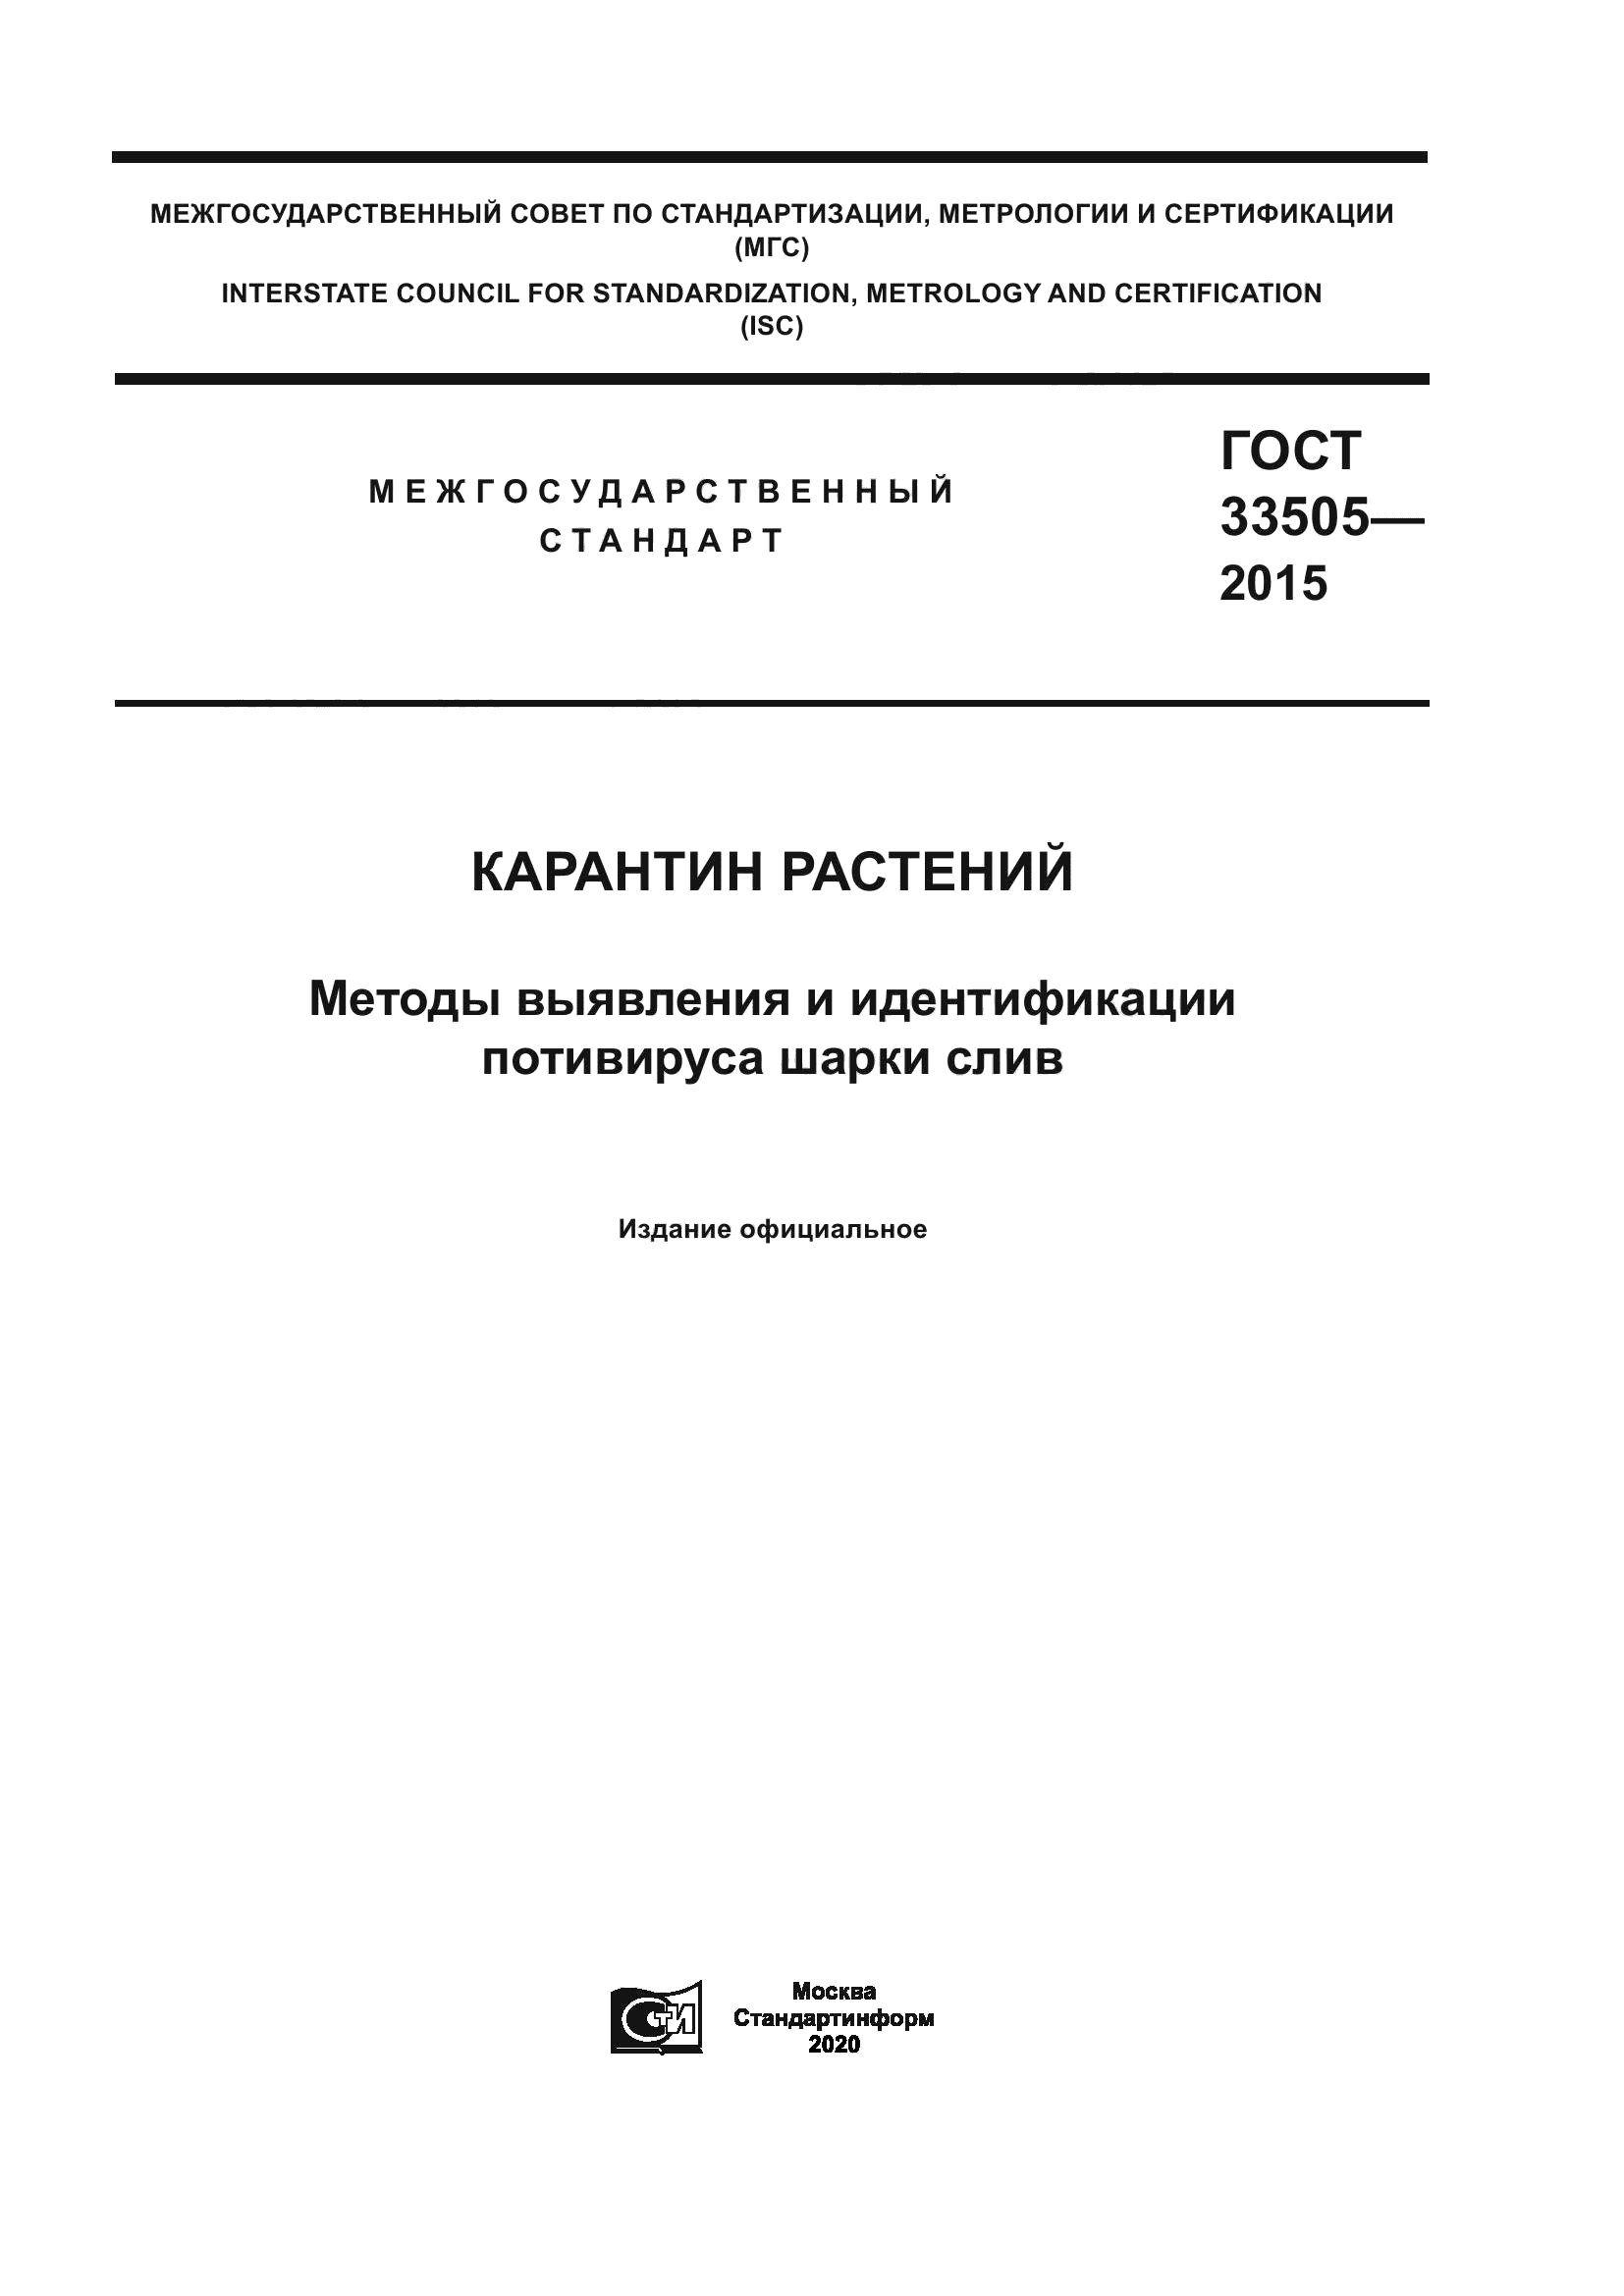 ГОСТ 33505-2015